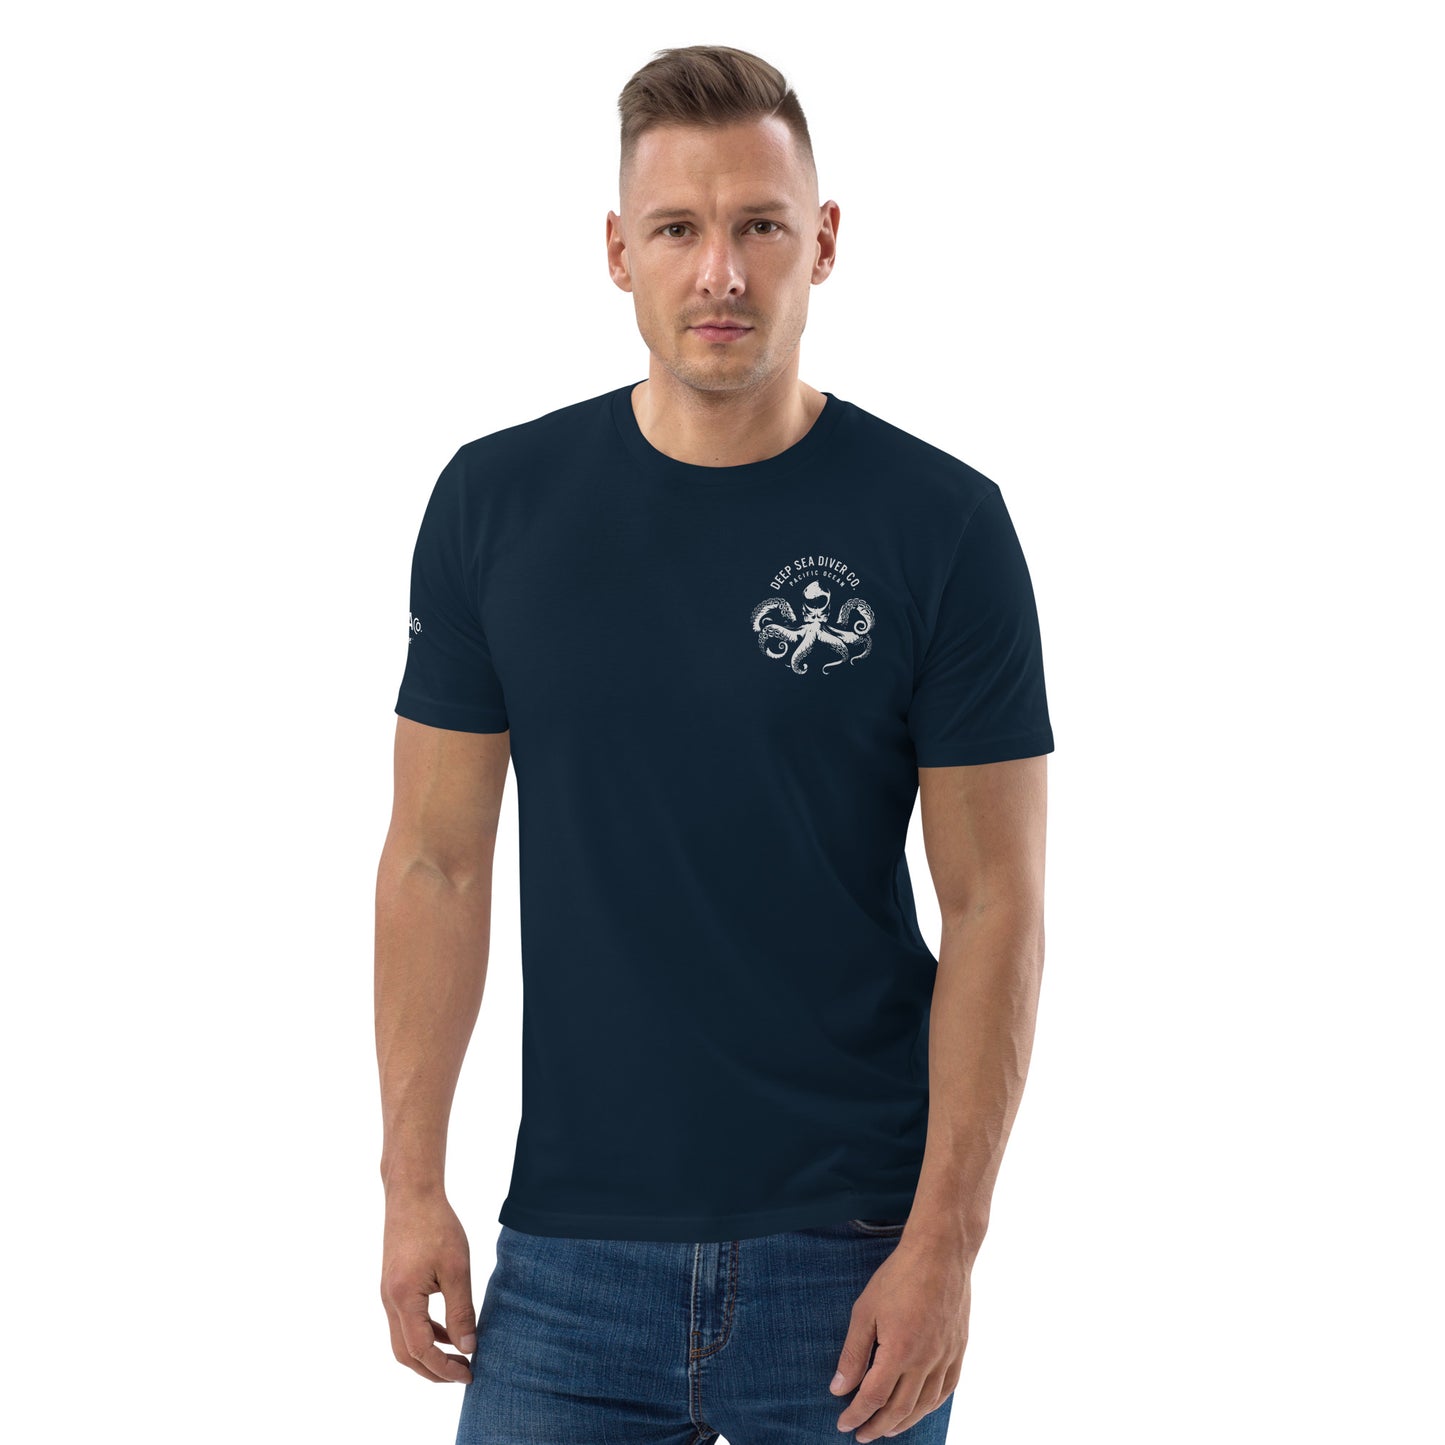 DeepSea Diver Official Tee Unisex organic cotton t-shirt